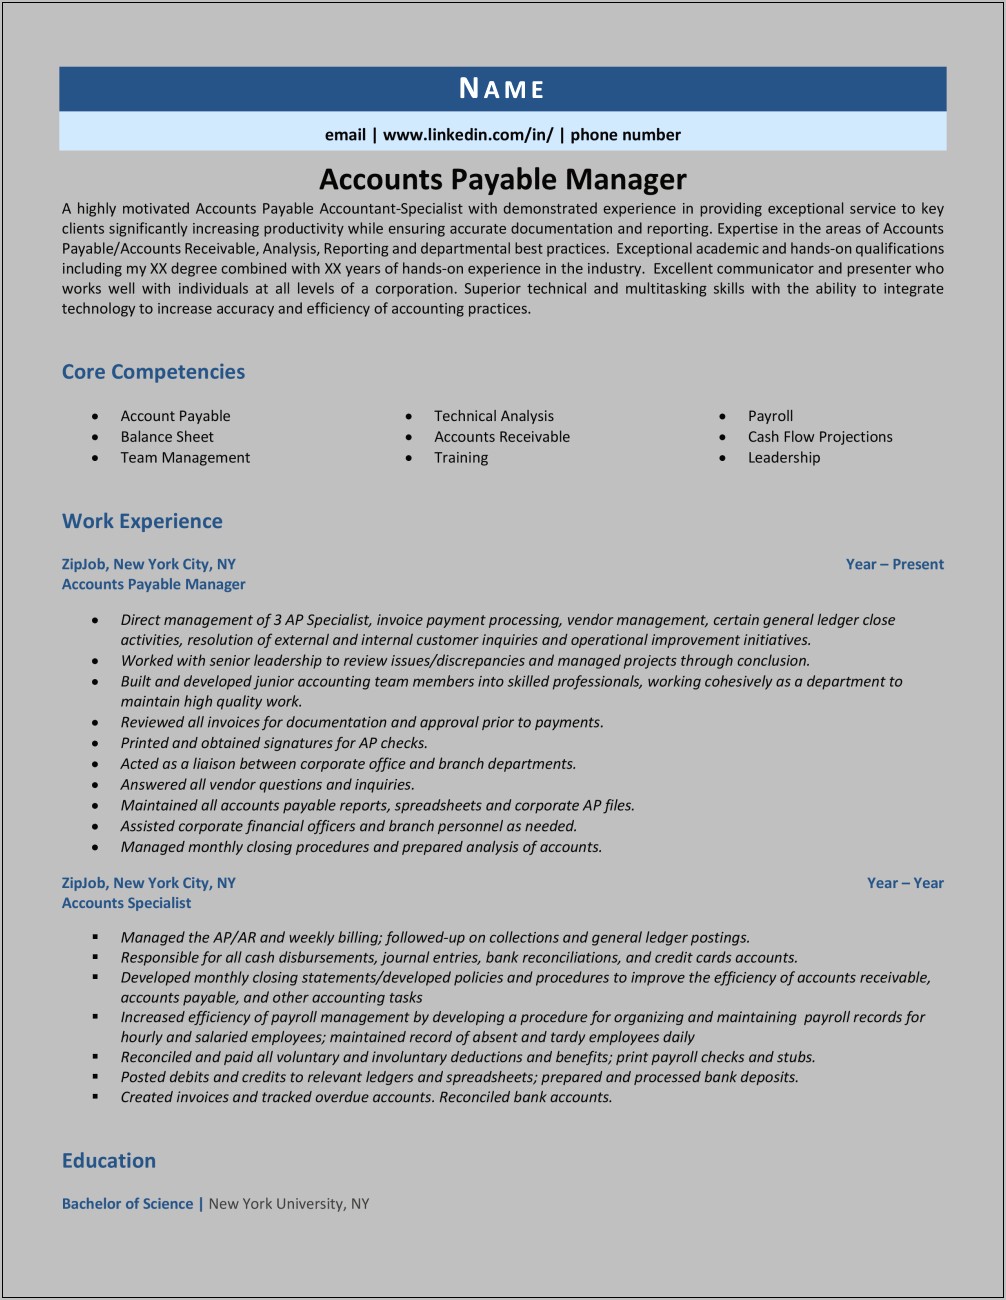 Accounts Payable Manager Resume Summary